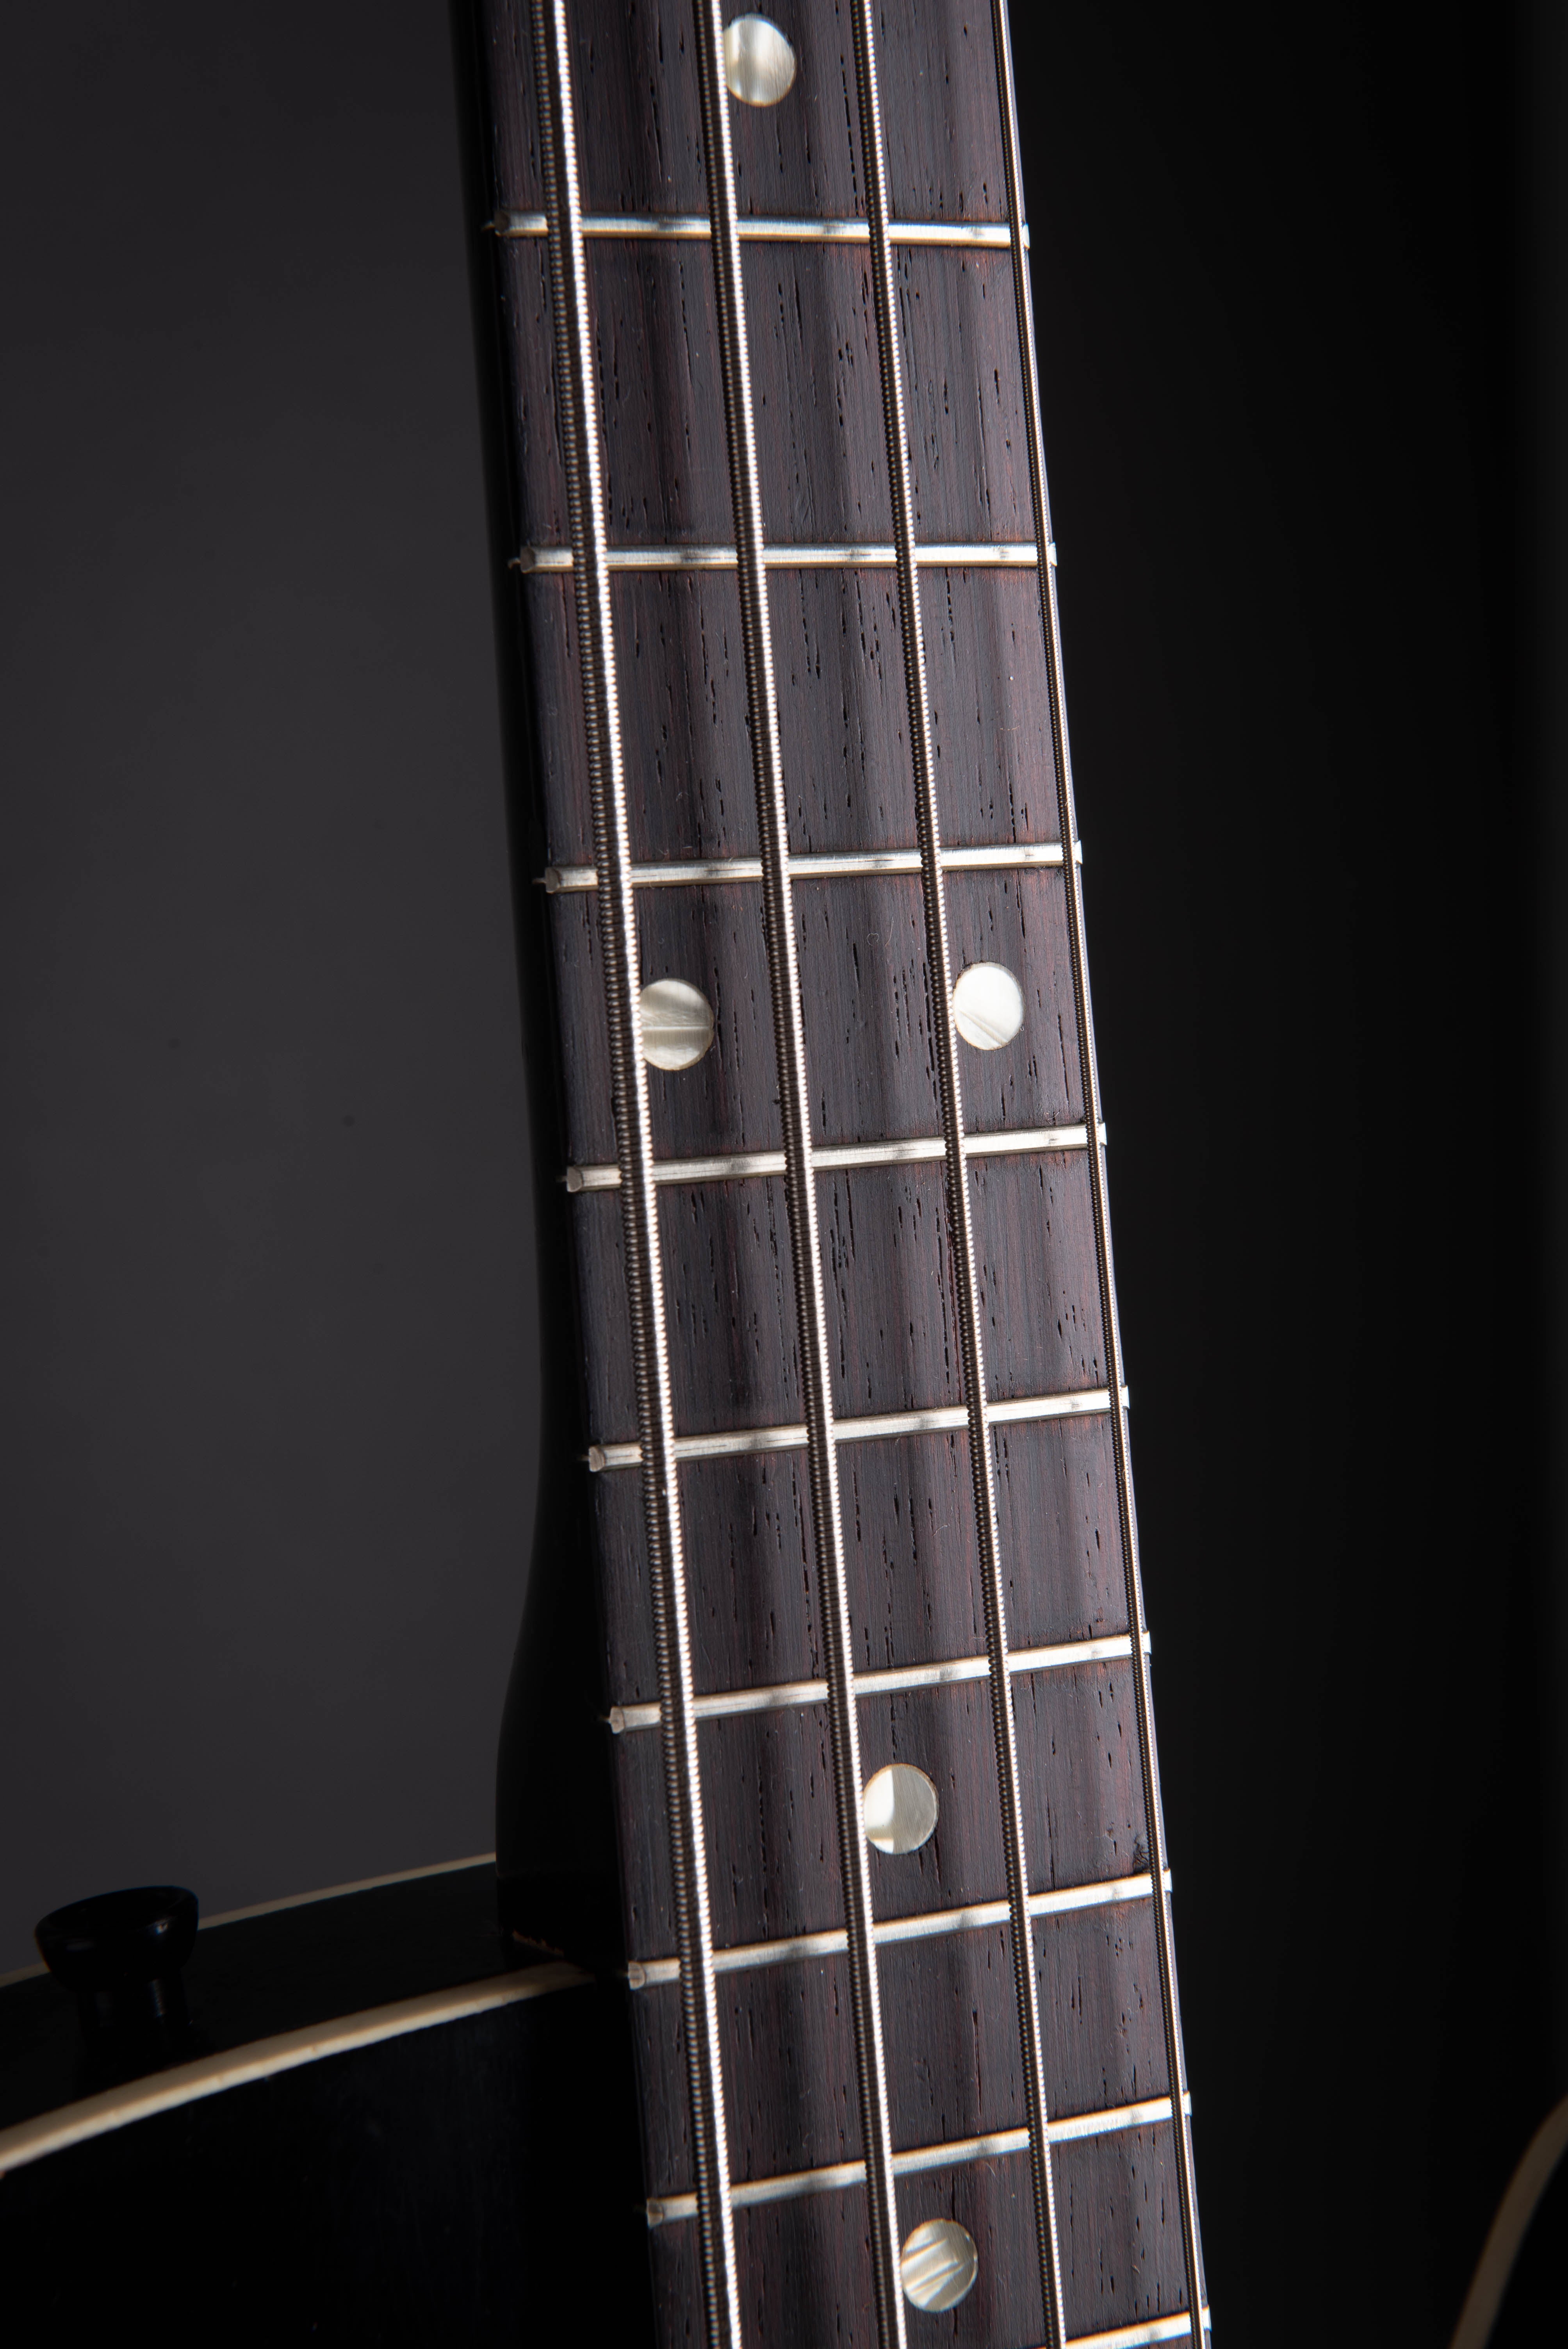 1961 Harmony H-22 Electric Bass Guitar